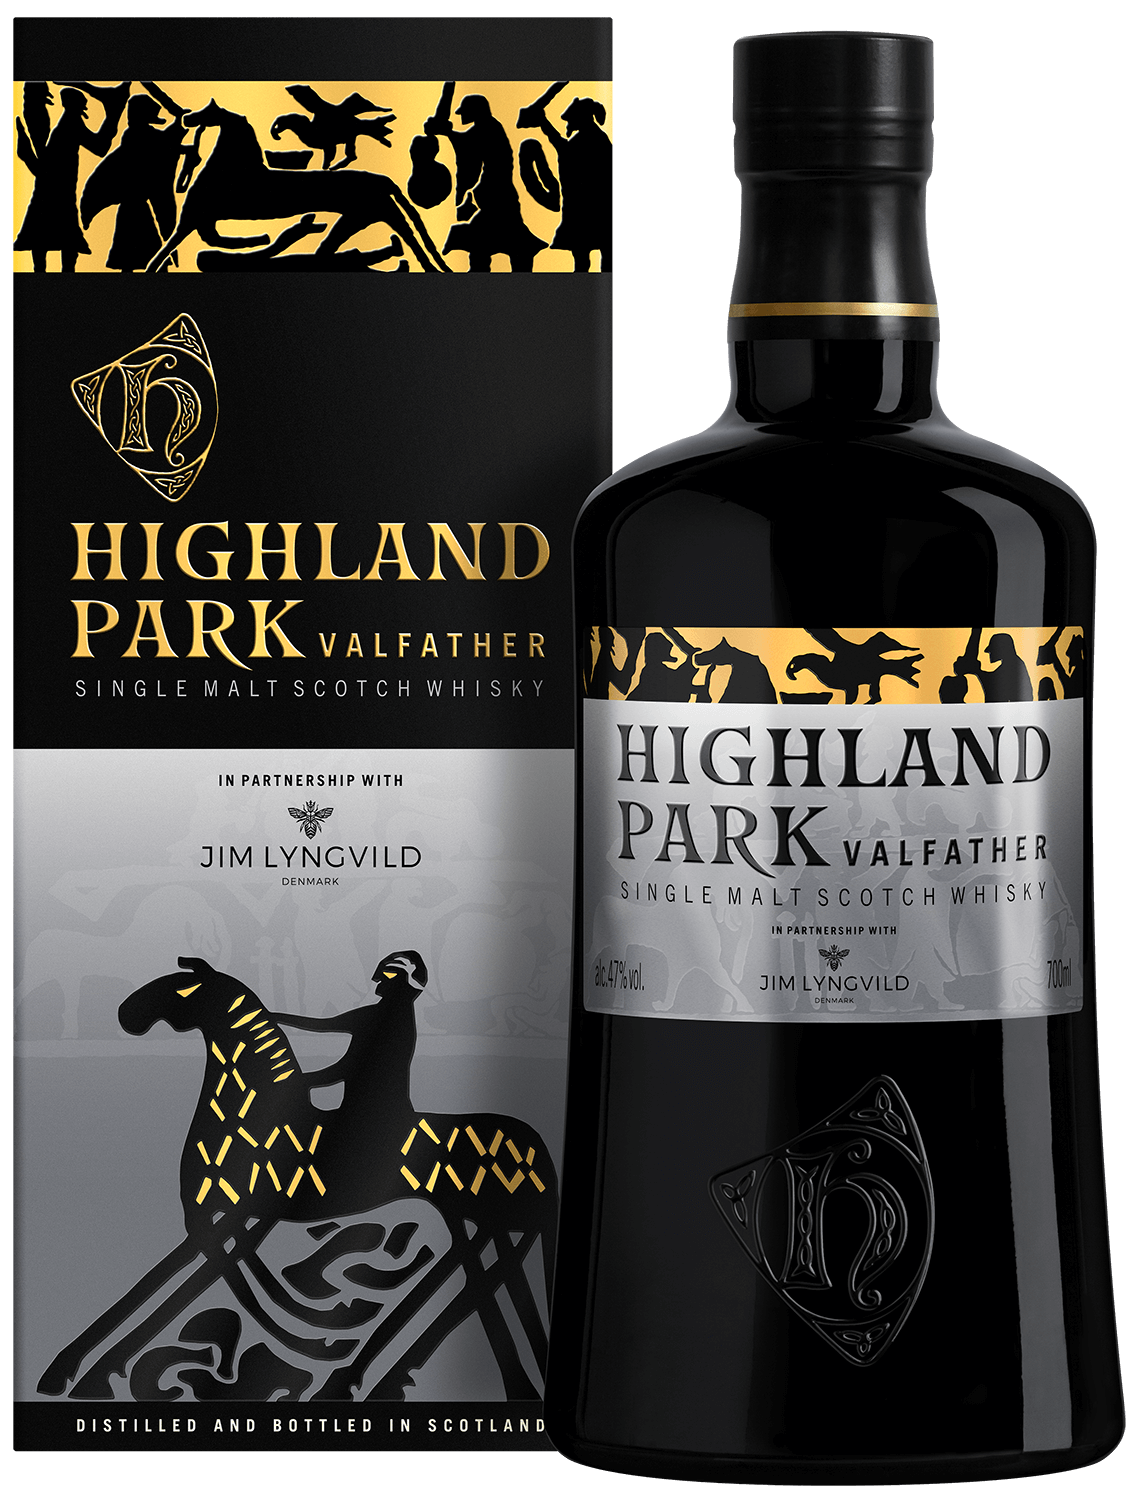 Highland Park Valfather single malt scotch whisky (gift box)